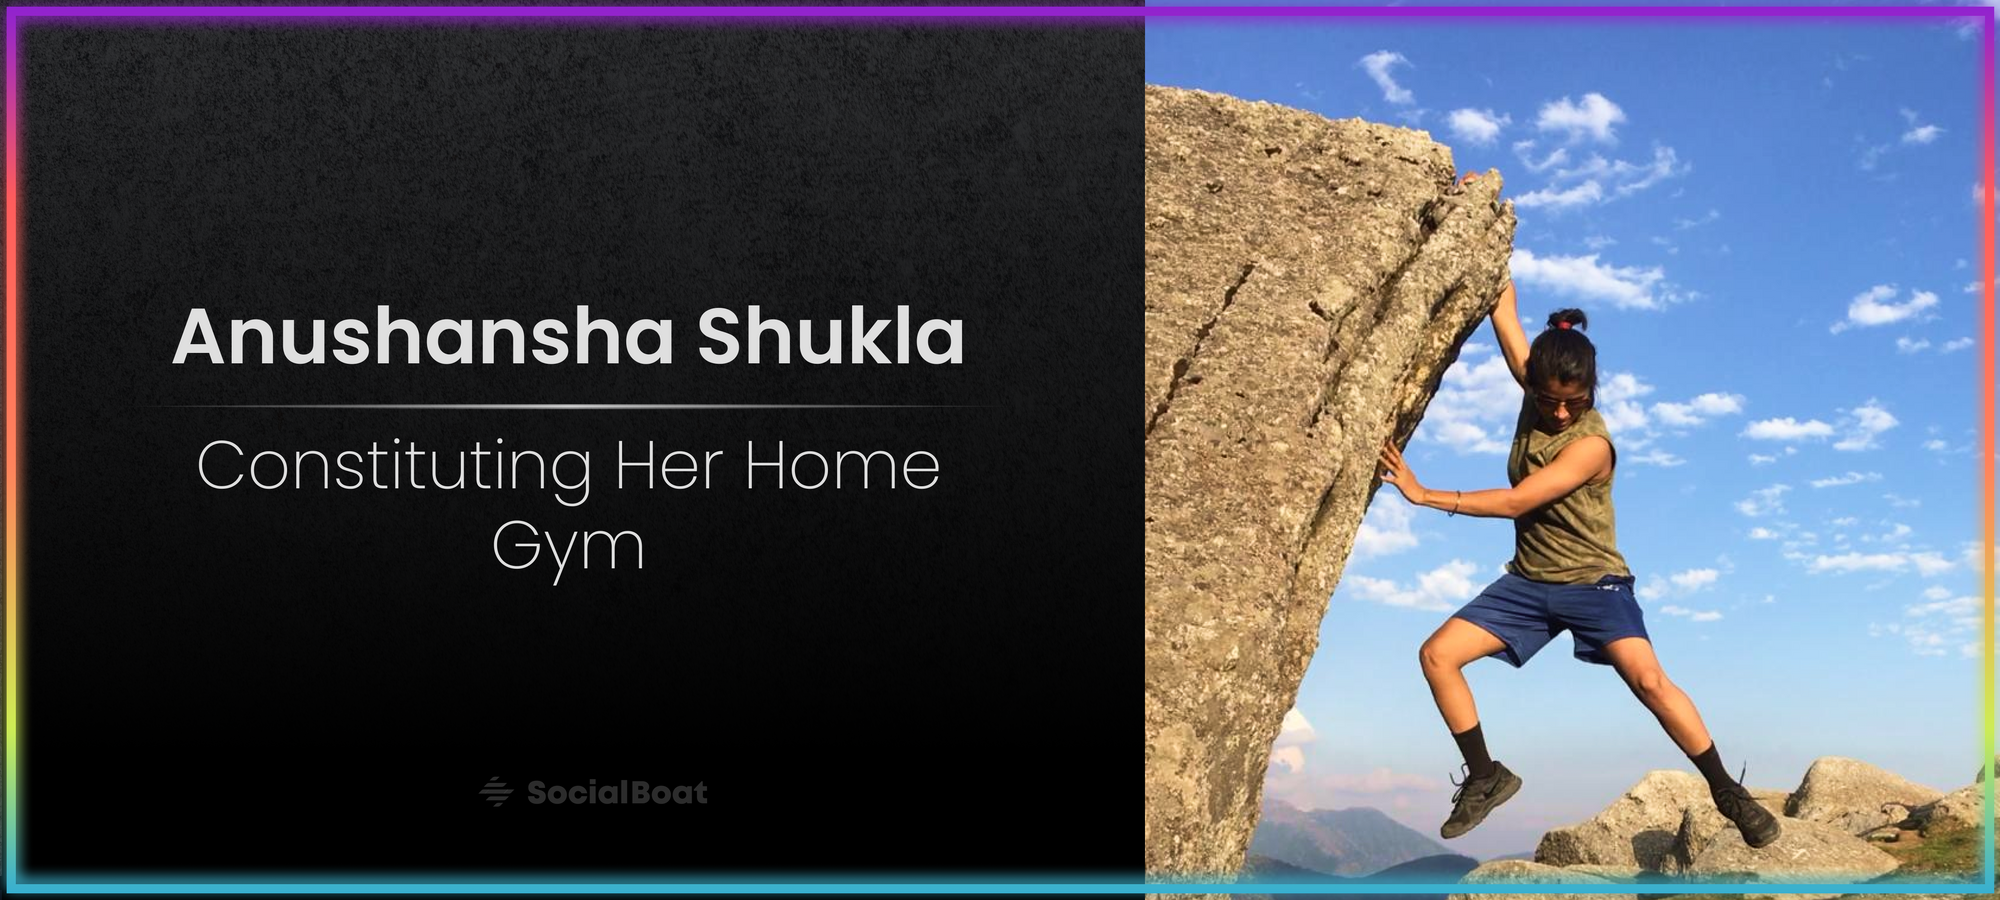 Anushansha's fitness journey towards her home gym. 